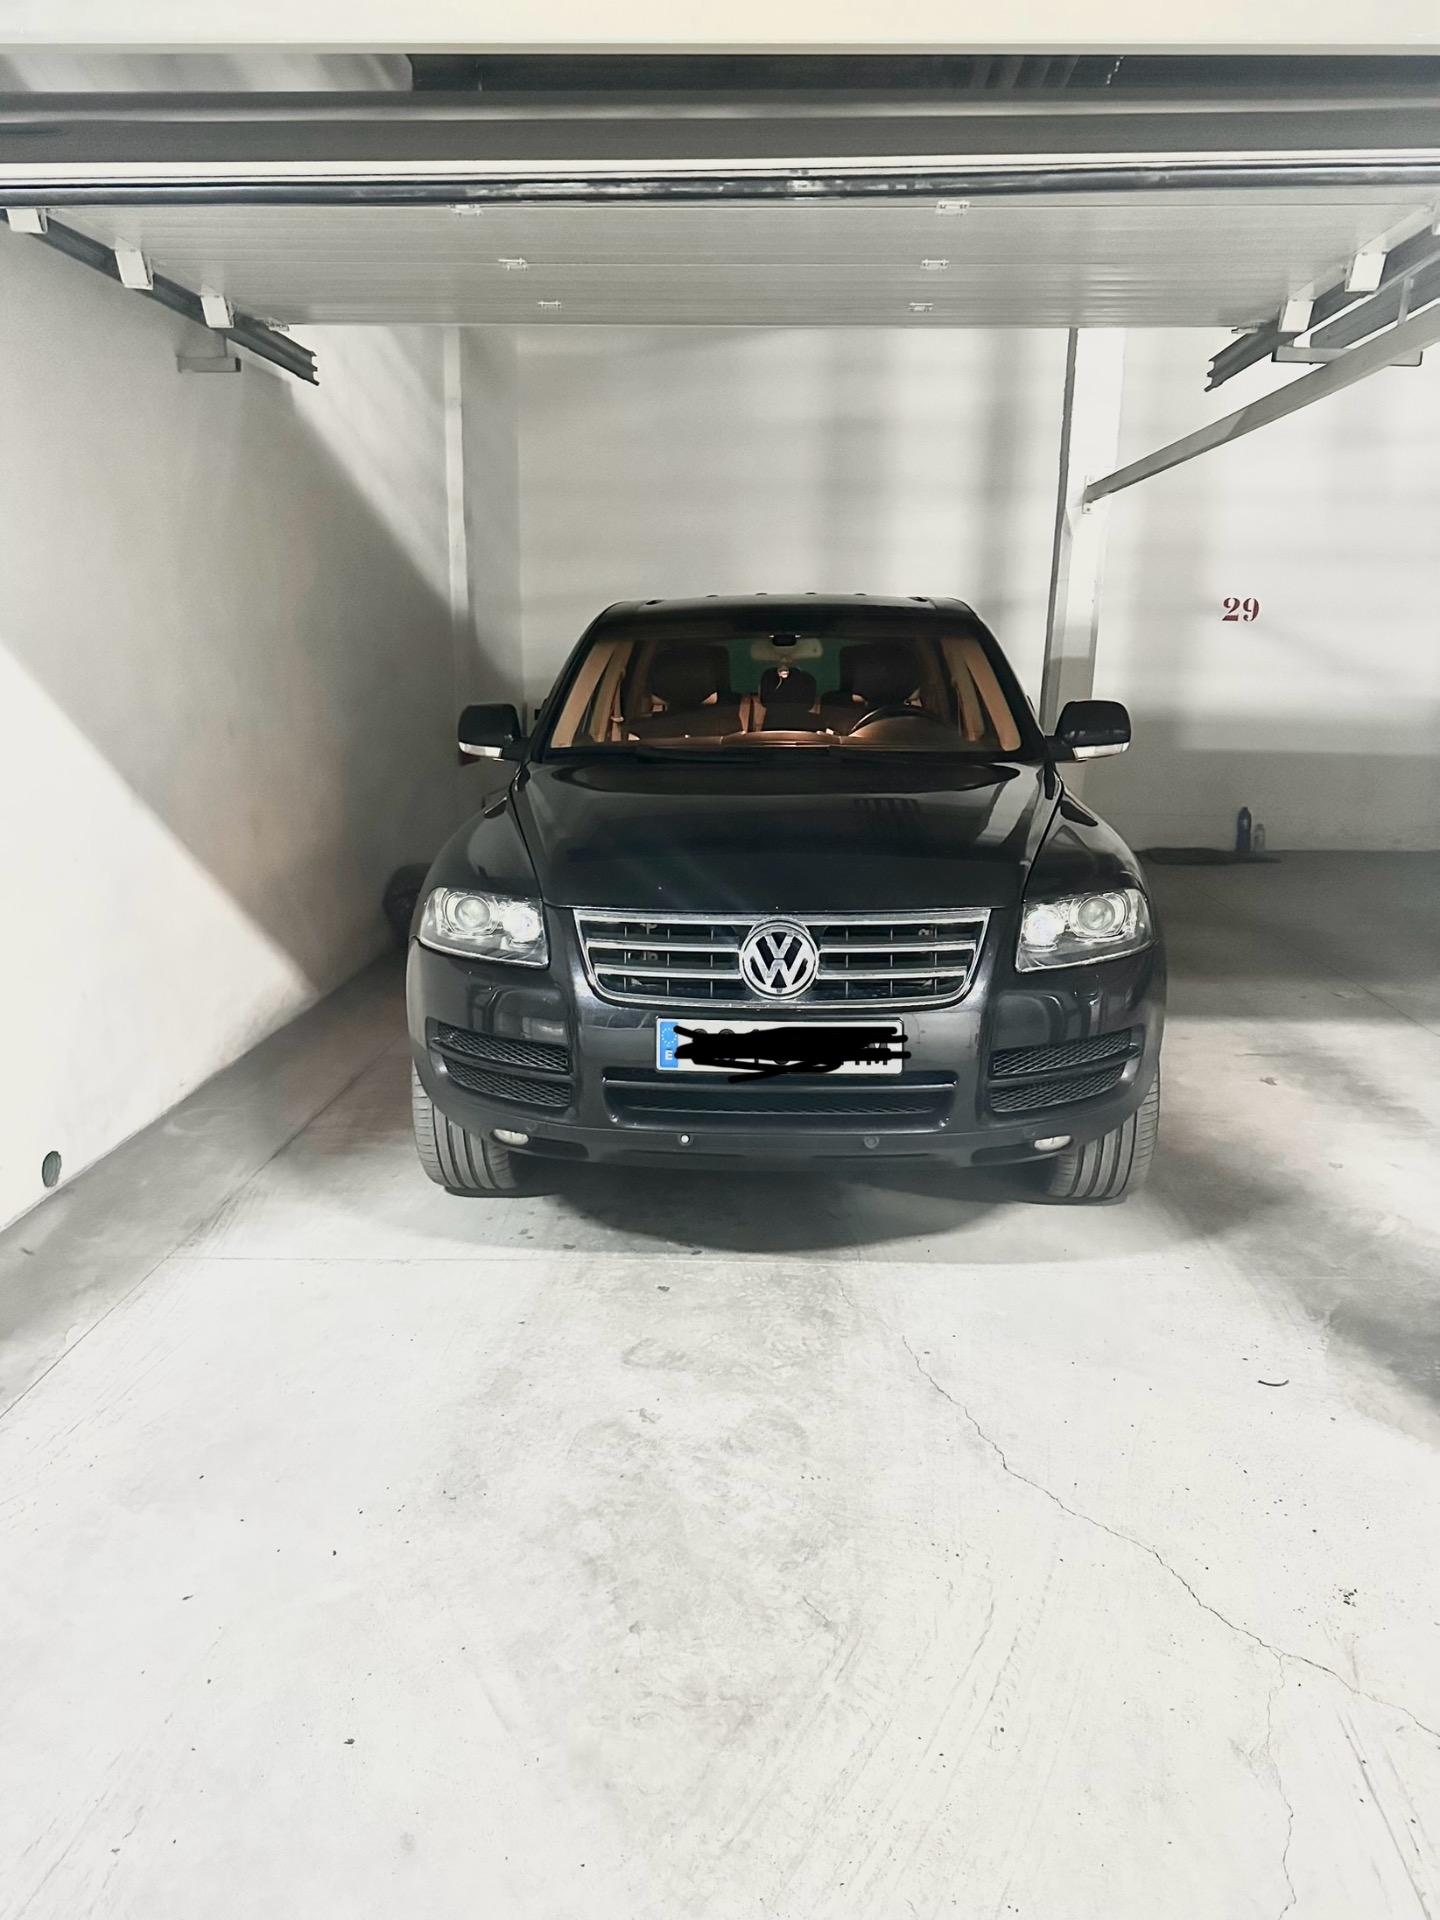 Foto de Cambio Volkswagen touareg por una furgoneta 